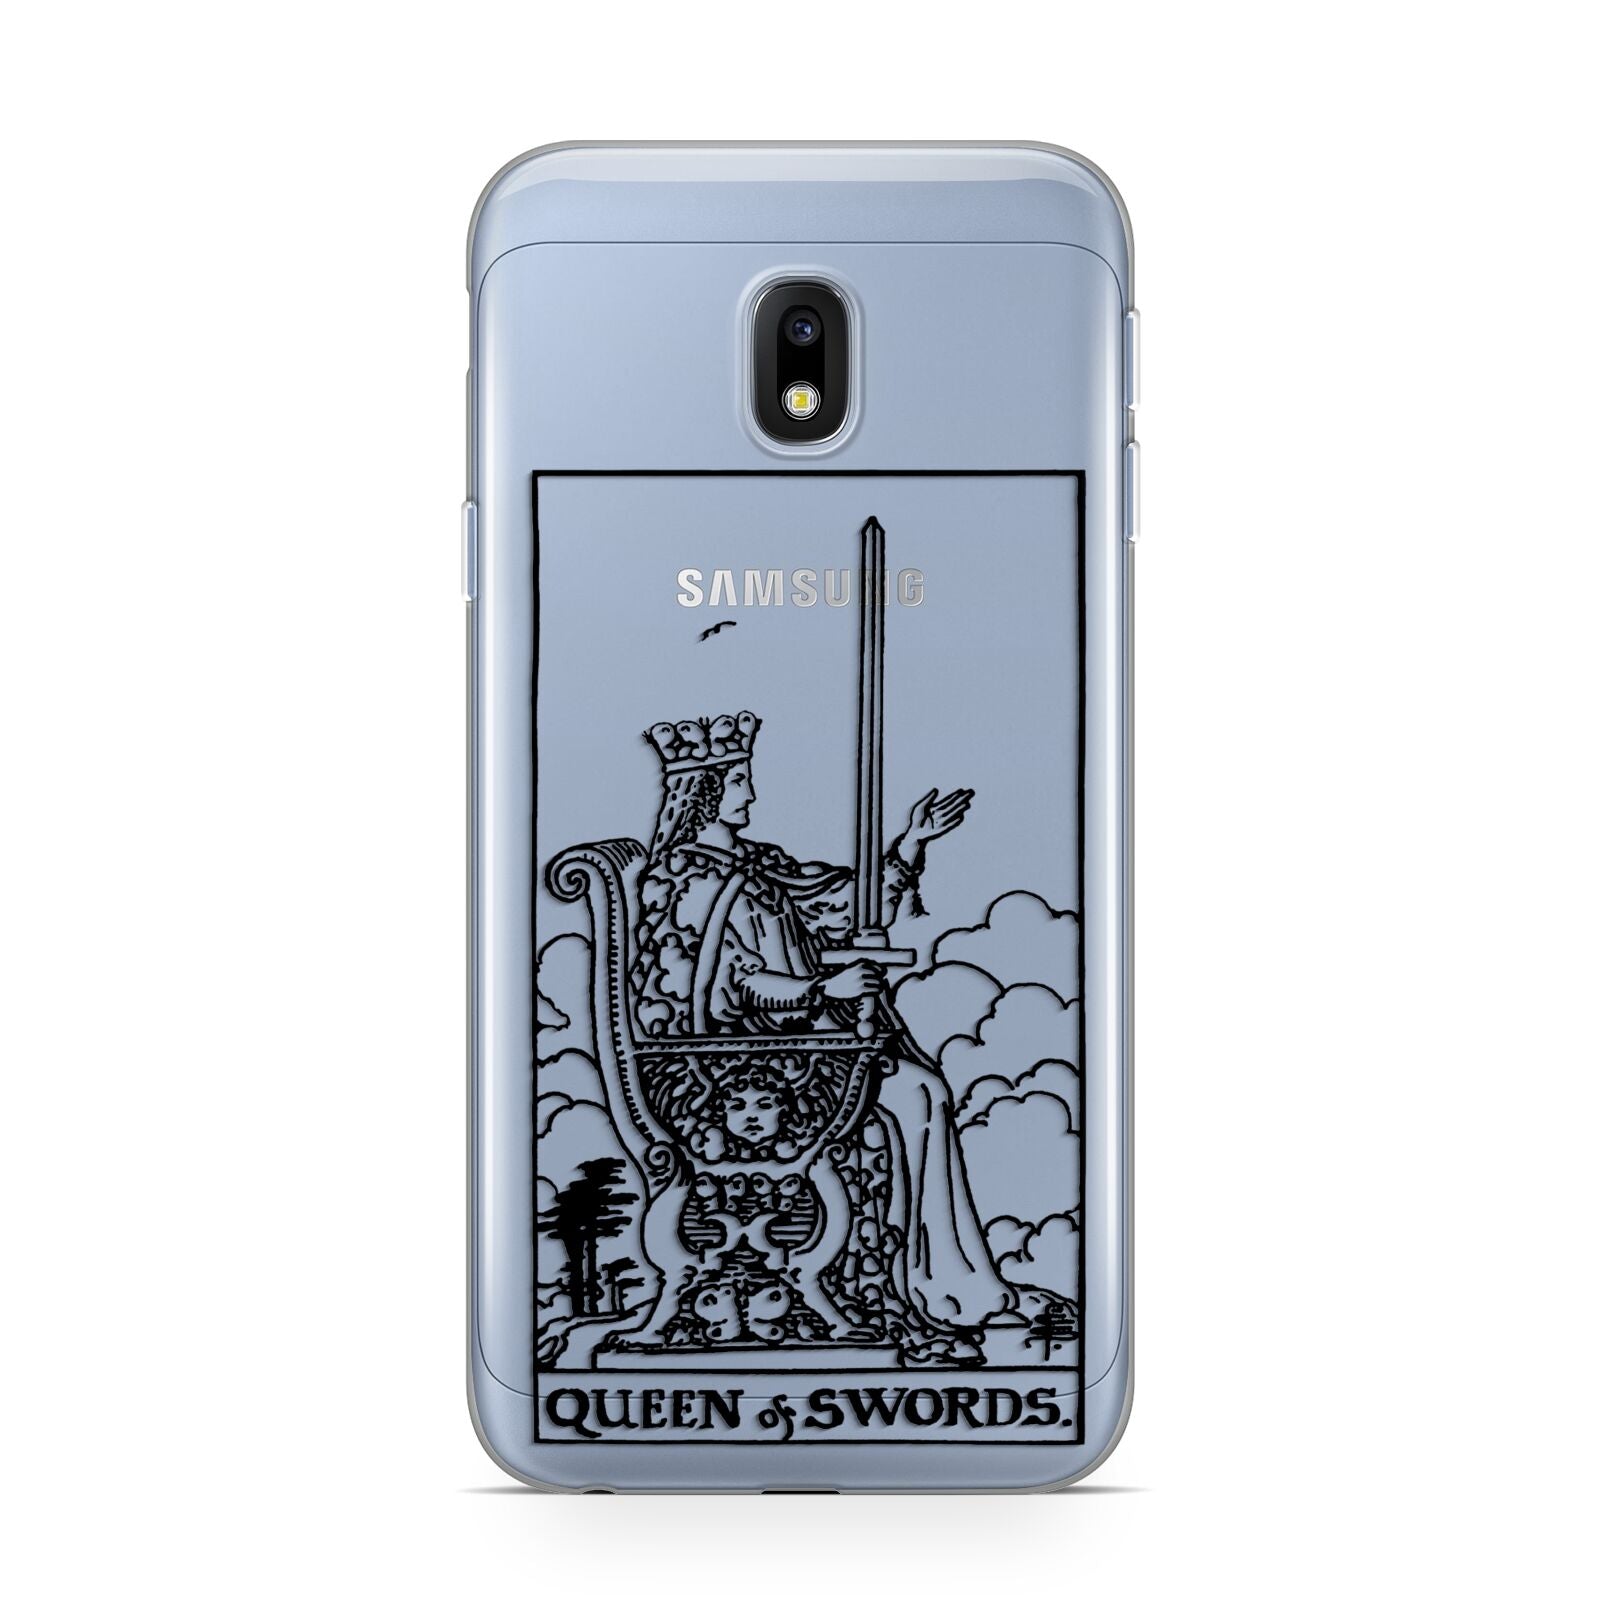 Queen of Swords Monochrome Samsung Galaxy J3 2017 Case